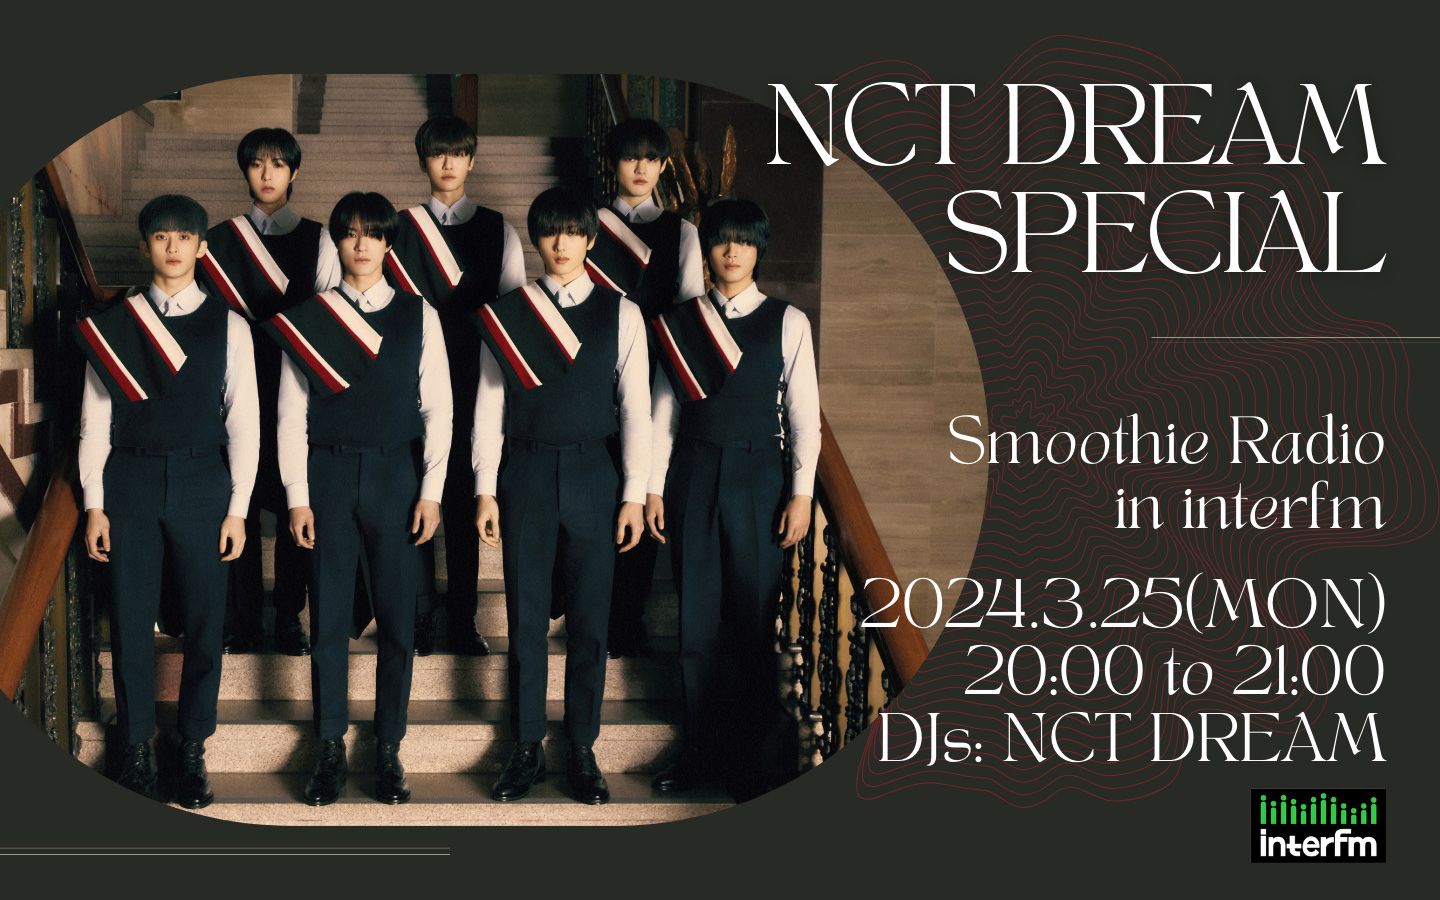 NCT DREAM Special 「Smoothie Radio in interfm」